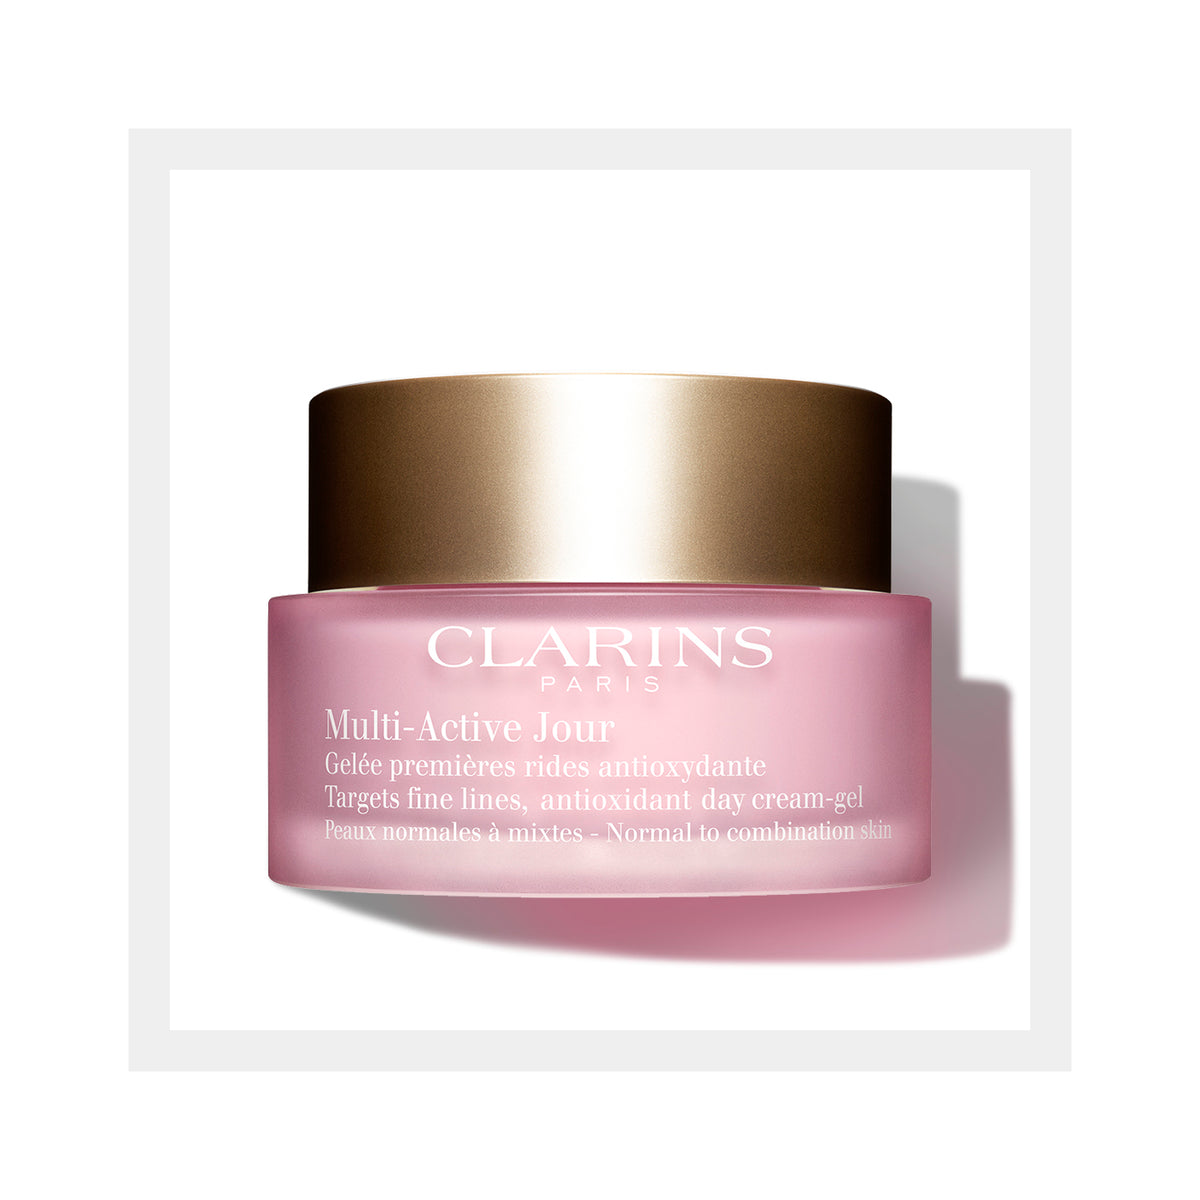 CLARINS Multi-Active Day Cream Gel - Normal/Combination Skin 50mL